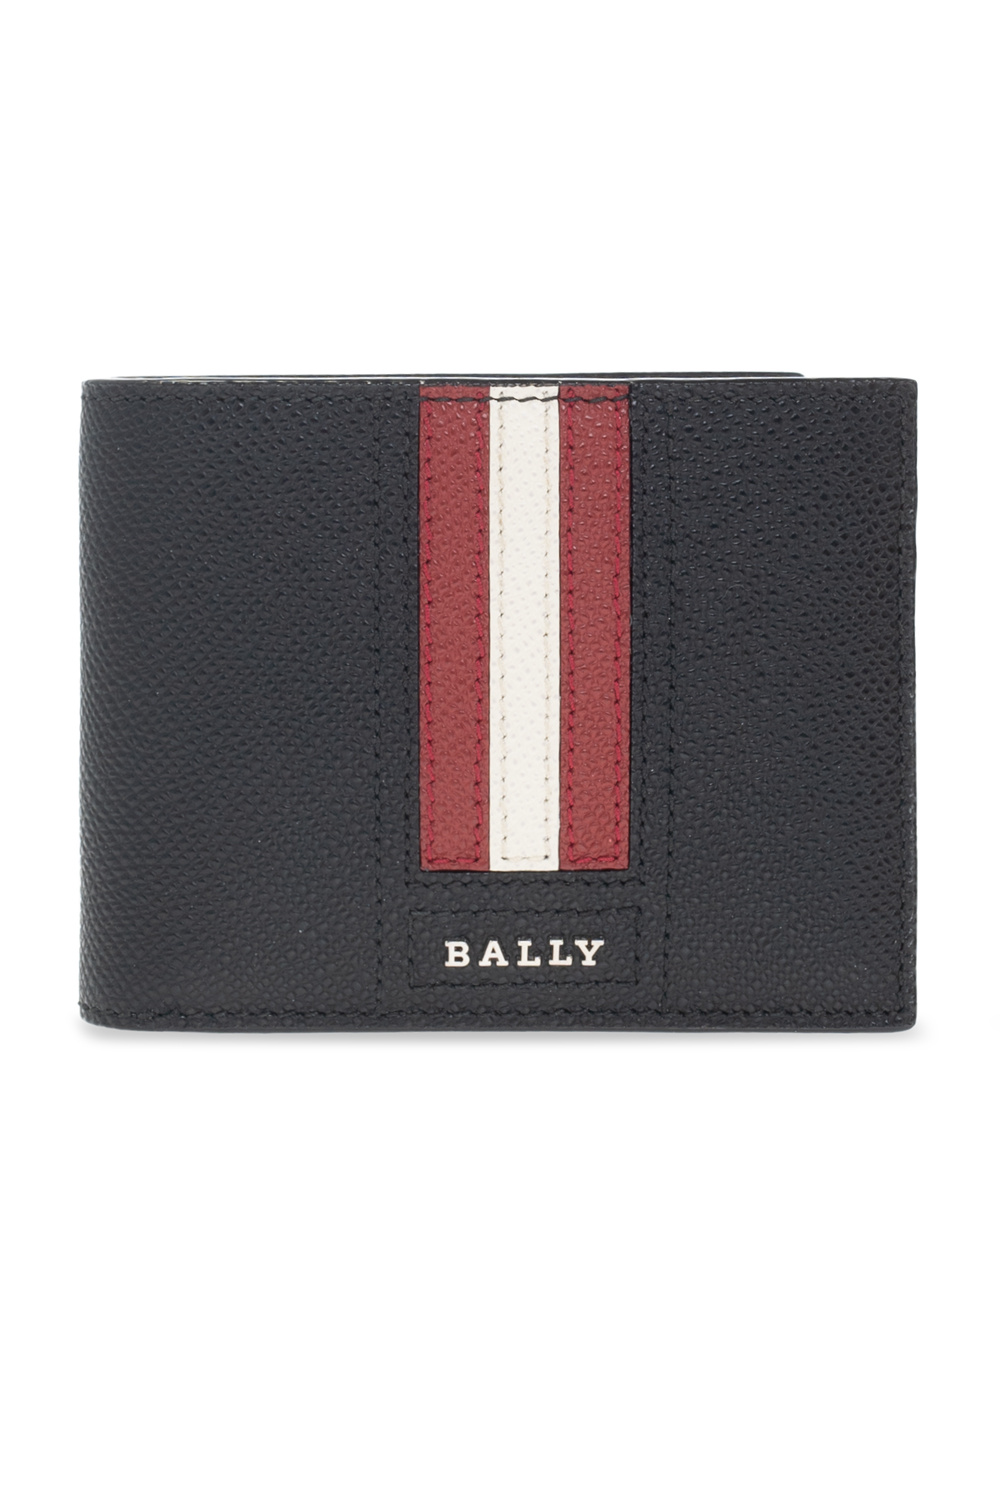 Bally Wallet with logo